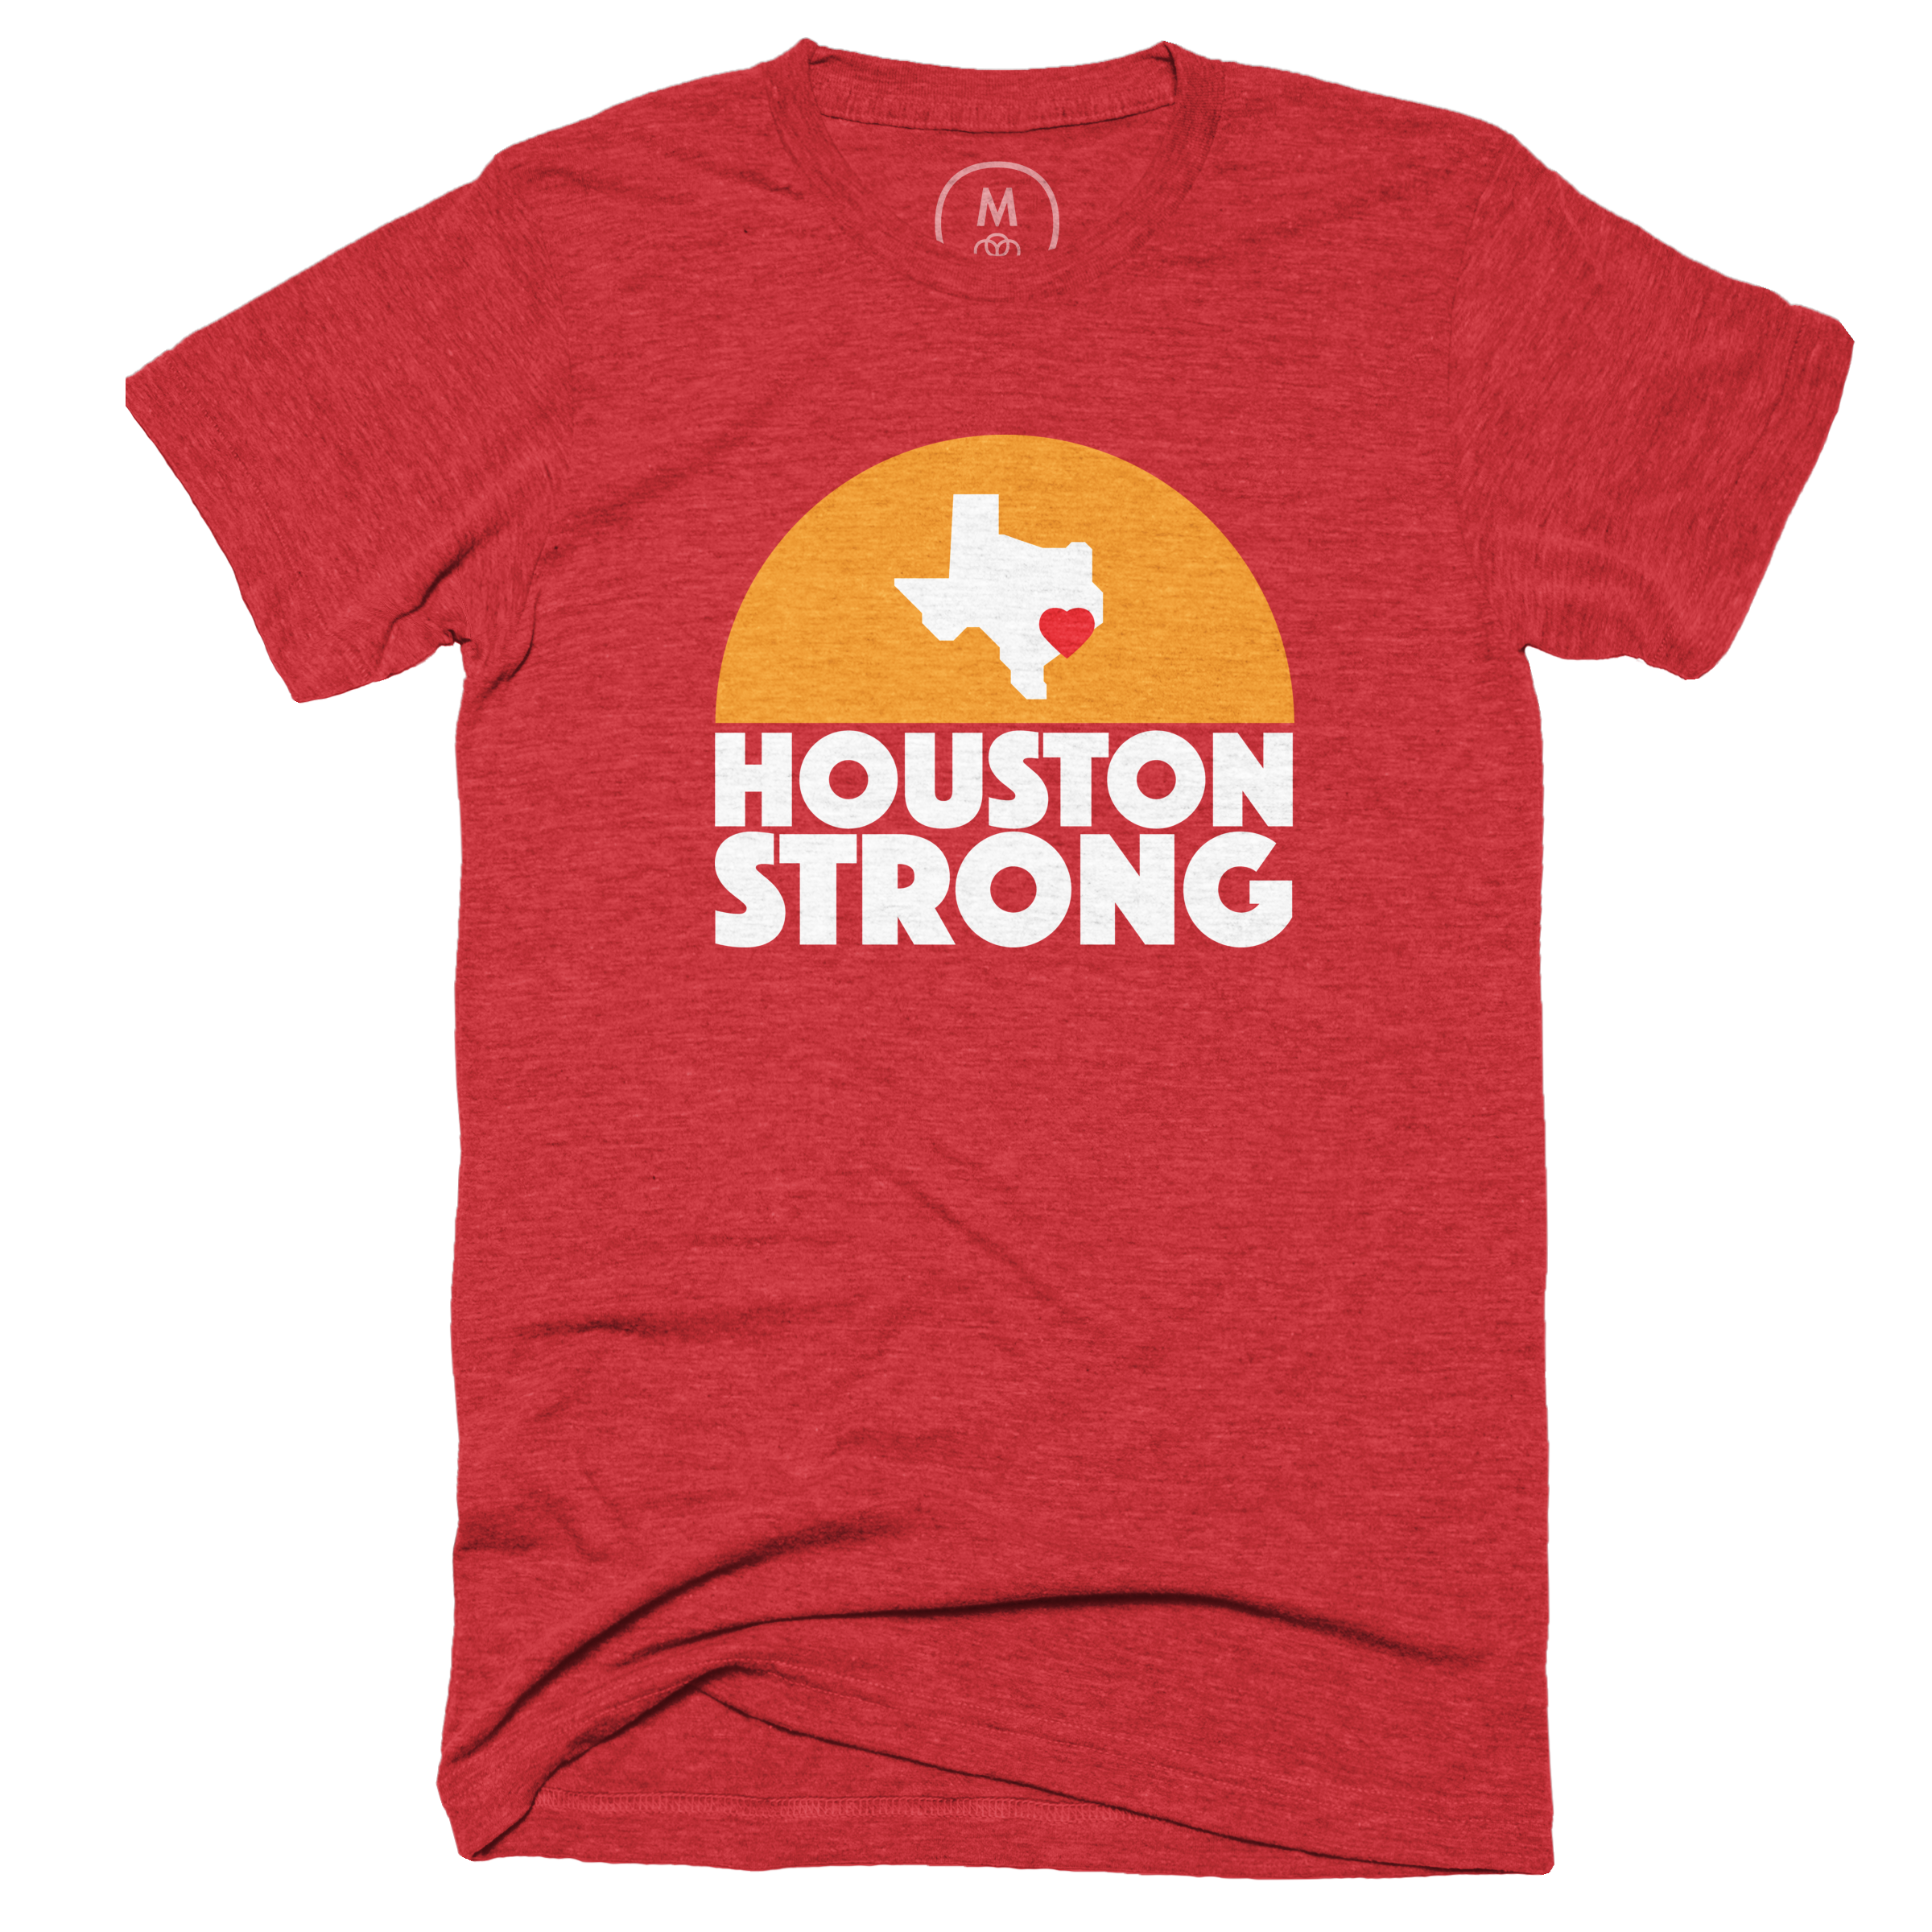 Houston Strong - Men's Tee